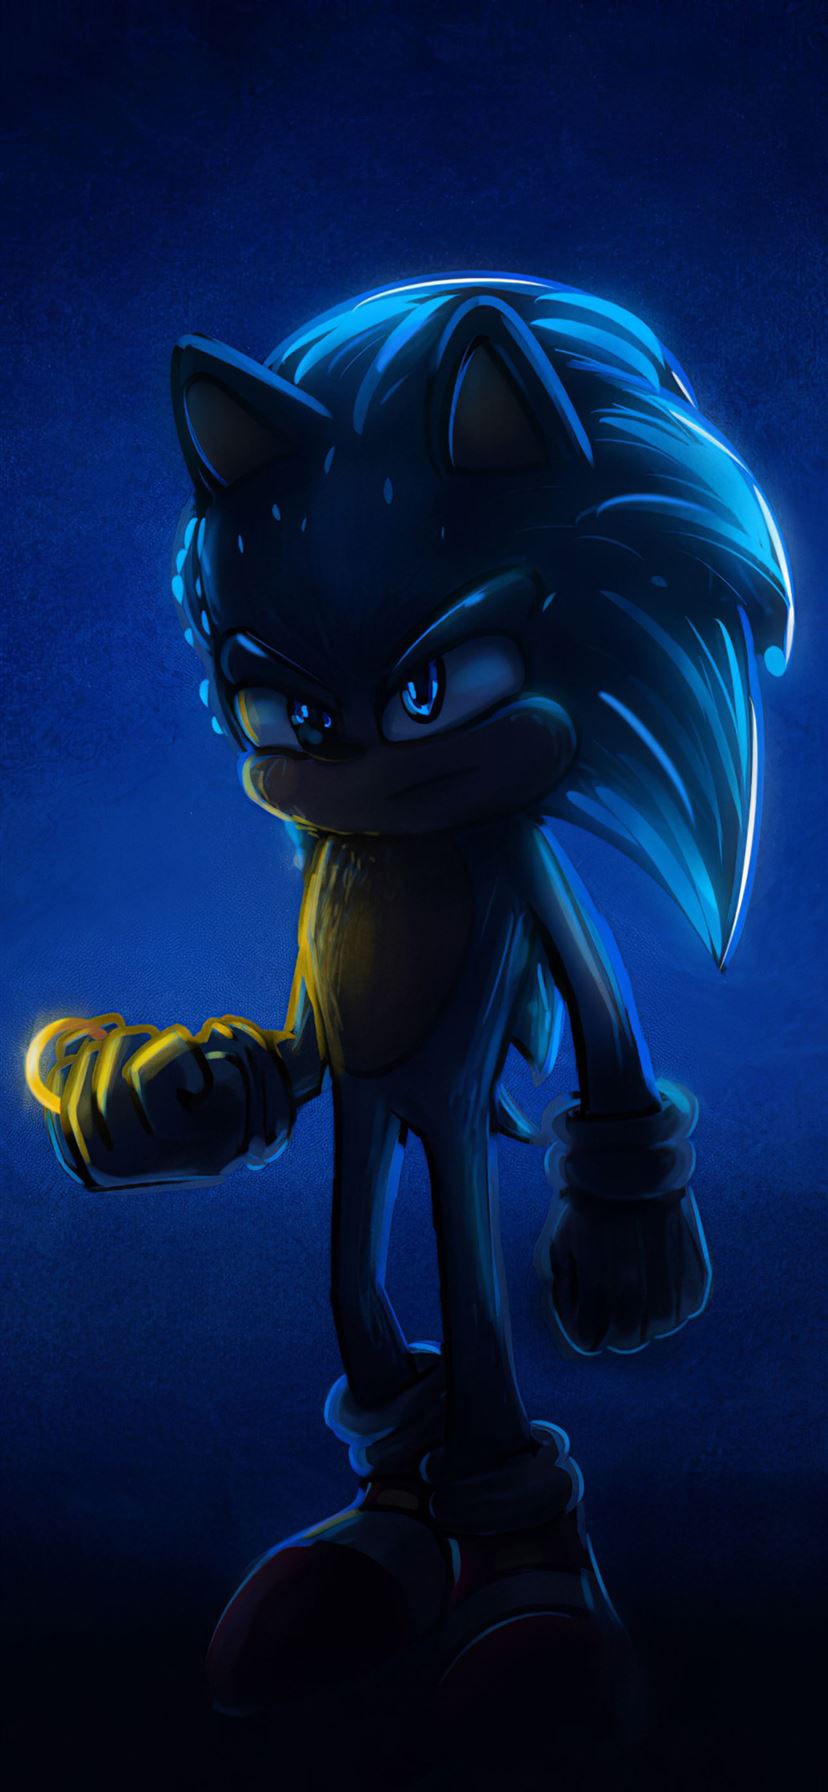 Best Sonic The Hedgehog Iphone 11 Wallpapers Hd Ilikewallpaper